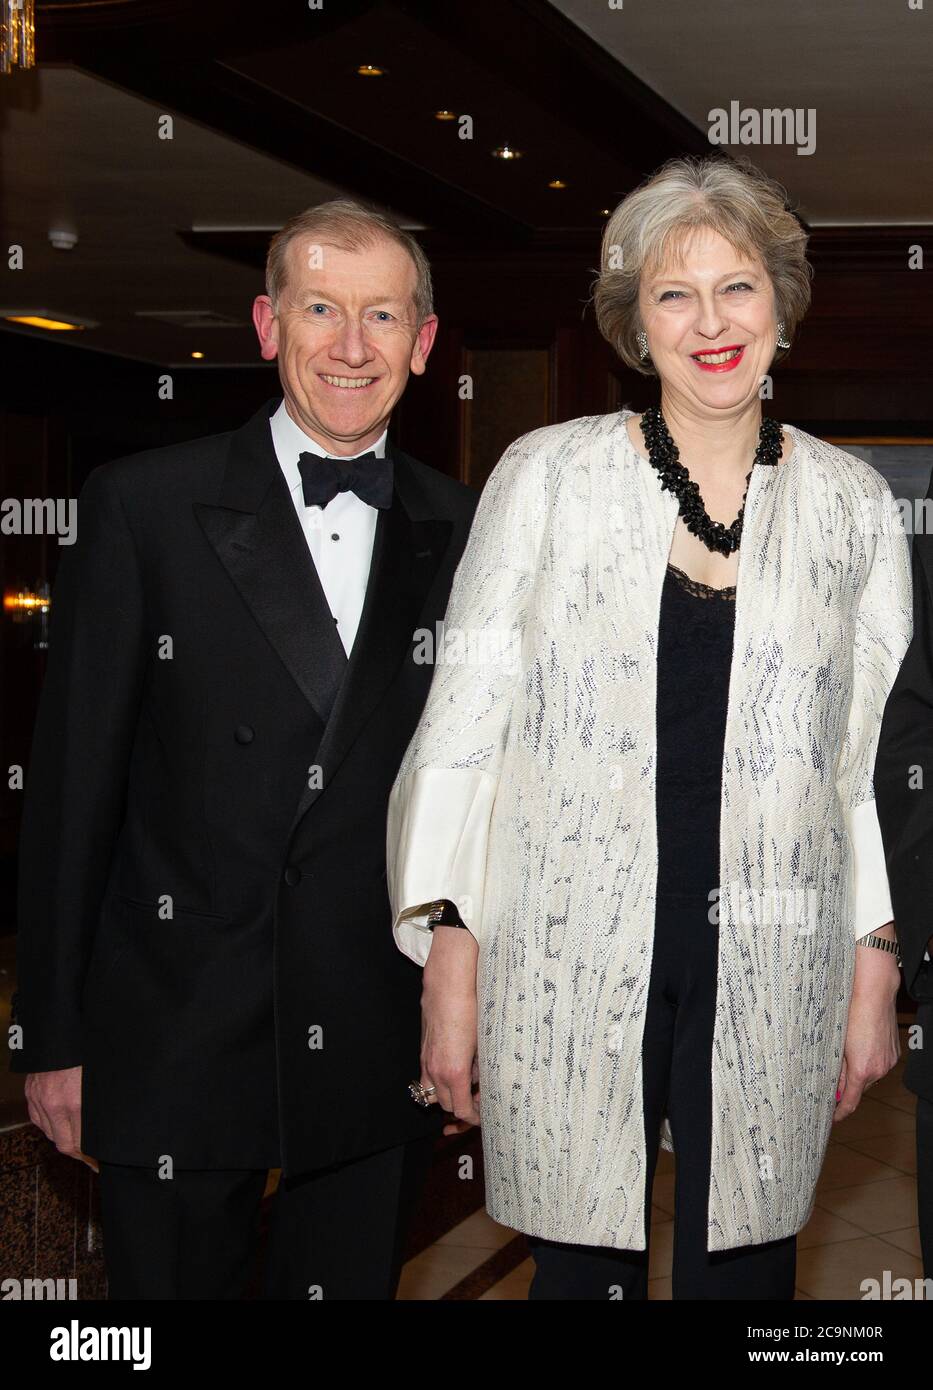 Maidenhead, Berkshire, Royaume-Uni. 5 mars 2016. La députée de Maidenhead, Theresa May, et son mari, Philip May, assistent au dîner de la Chambre de commerce de Maidenhead Banque D'Images